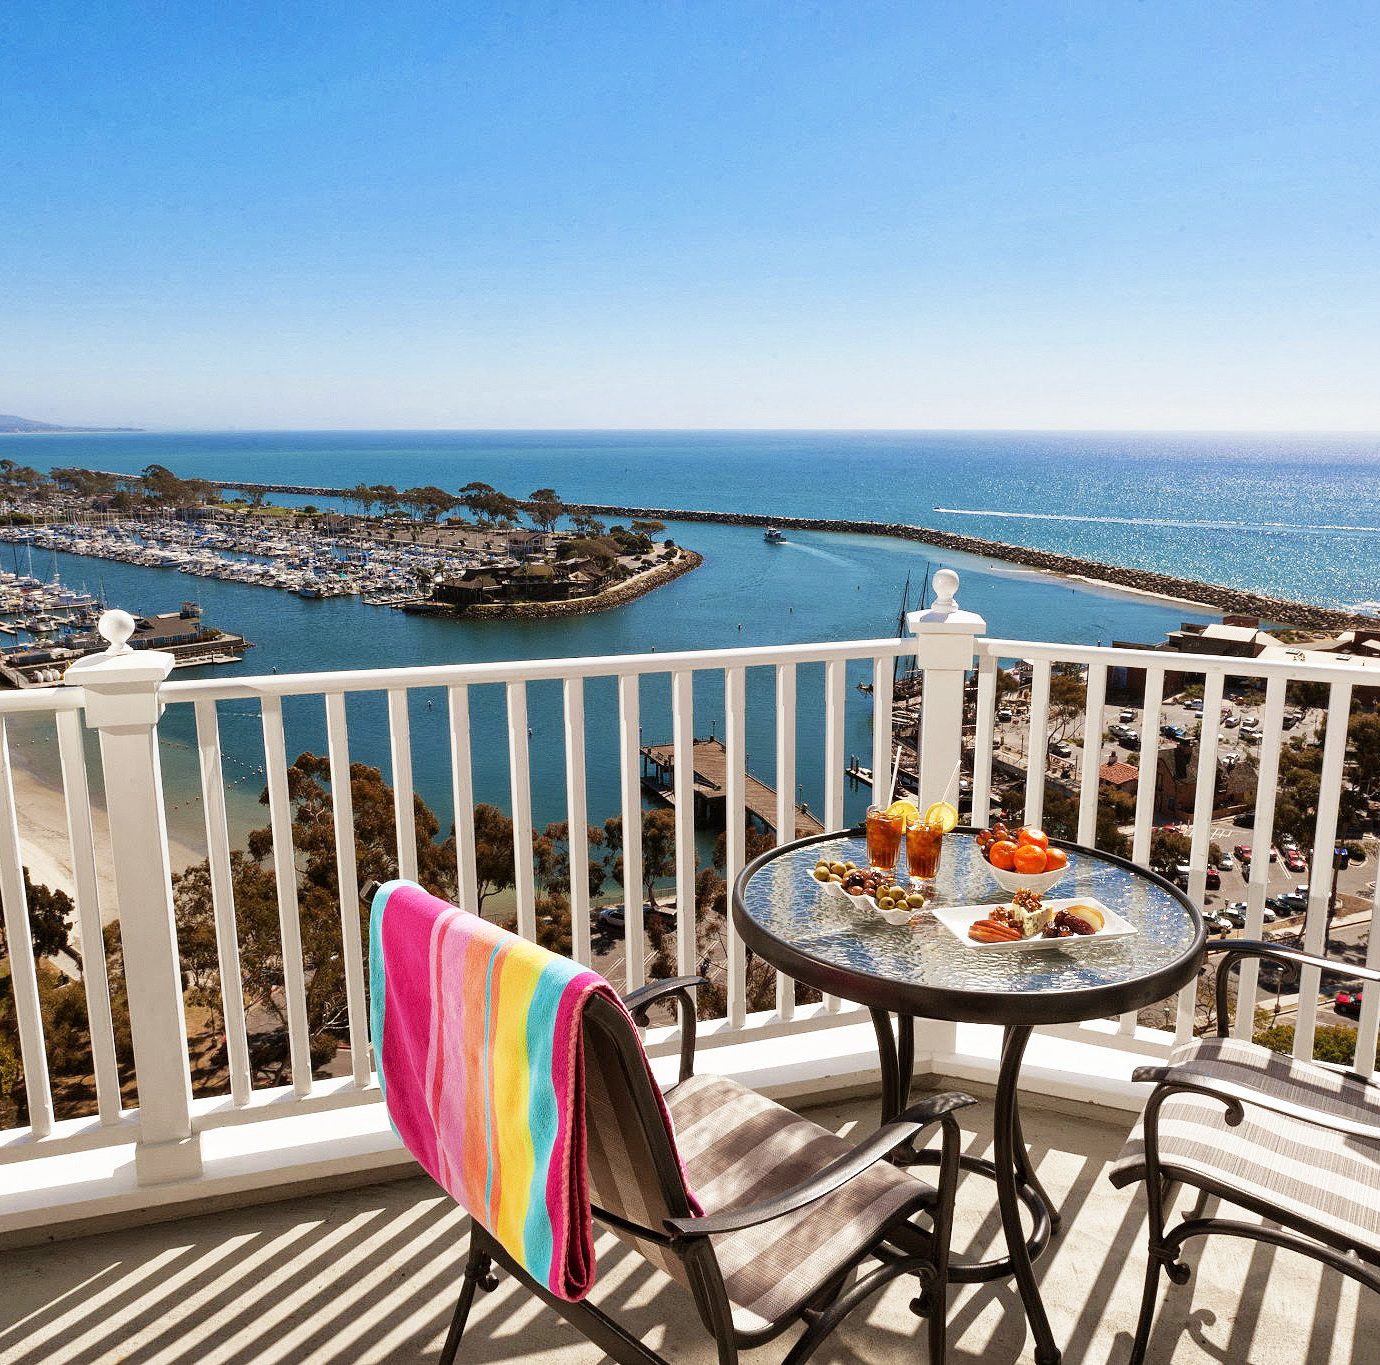 Bar Beachfront Dining Drink Eat Ocean sky chair leisure property Deck Resort home Villa overlooking cottage Balcony porch